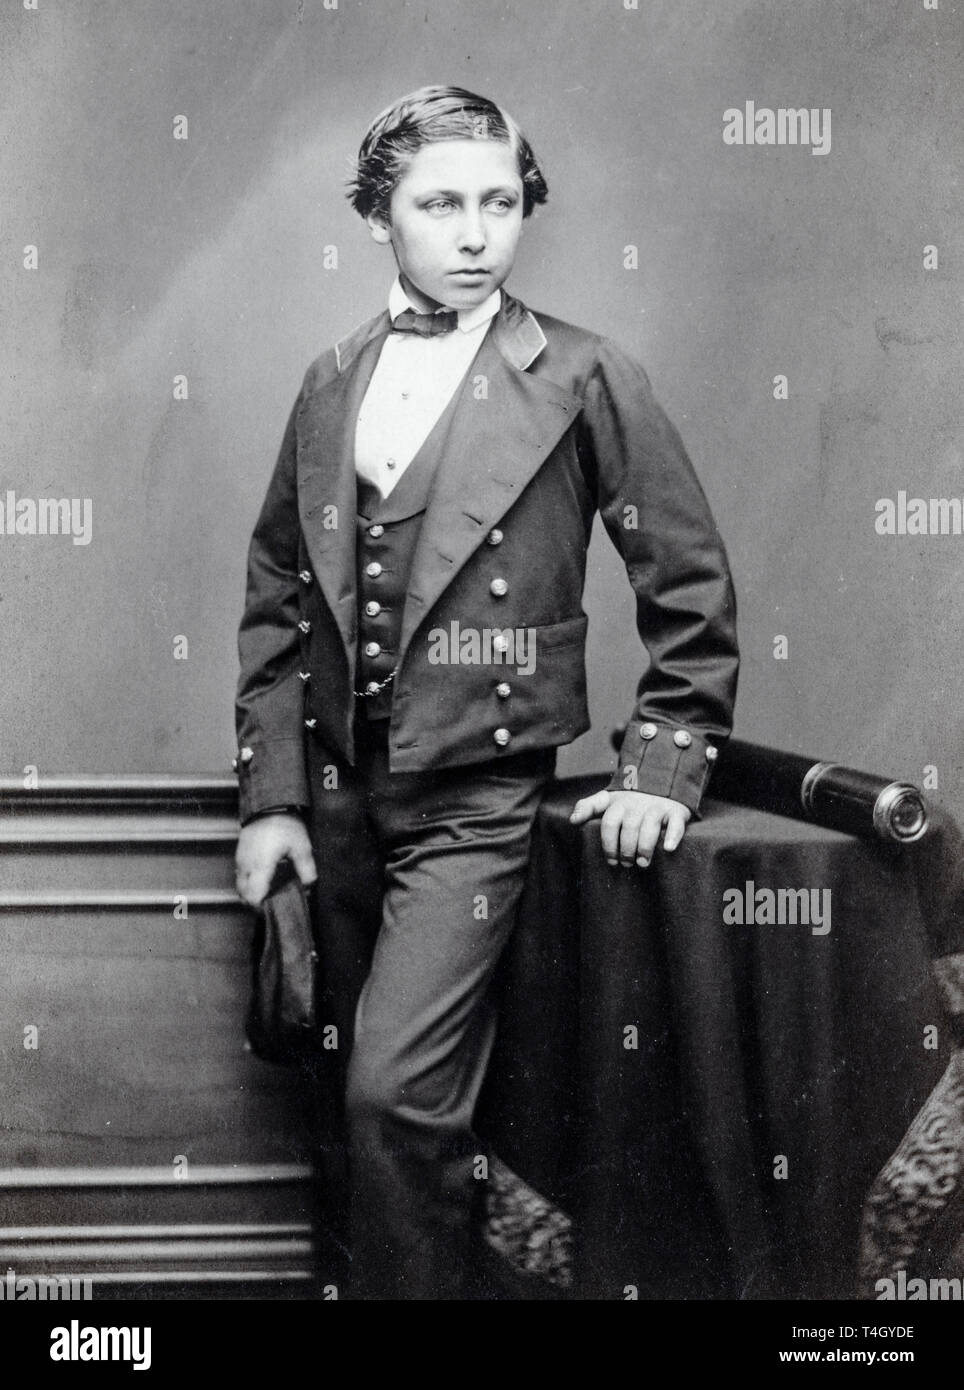 John Jabez Edwin Mayal, The Prince of Wales (Edward VII), portrait photograph as a teenager, circa 1856 Stock Photo